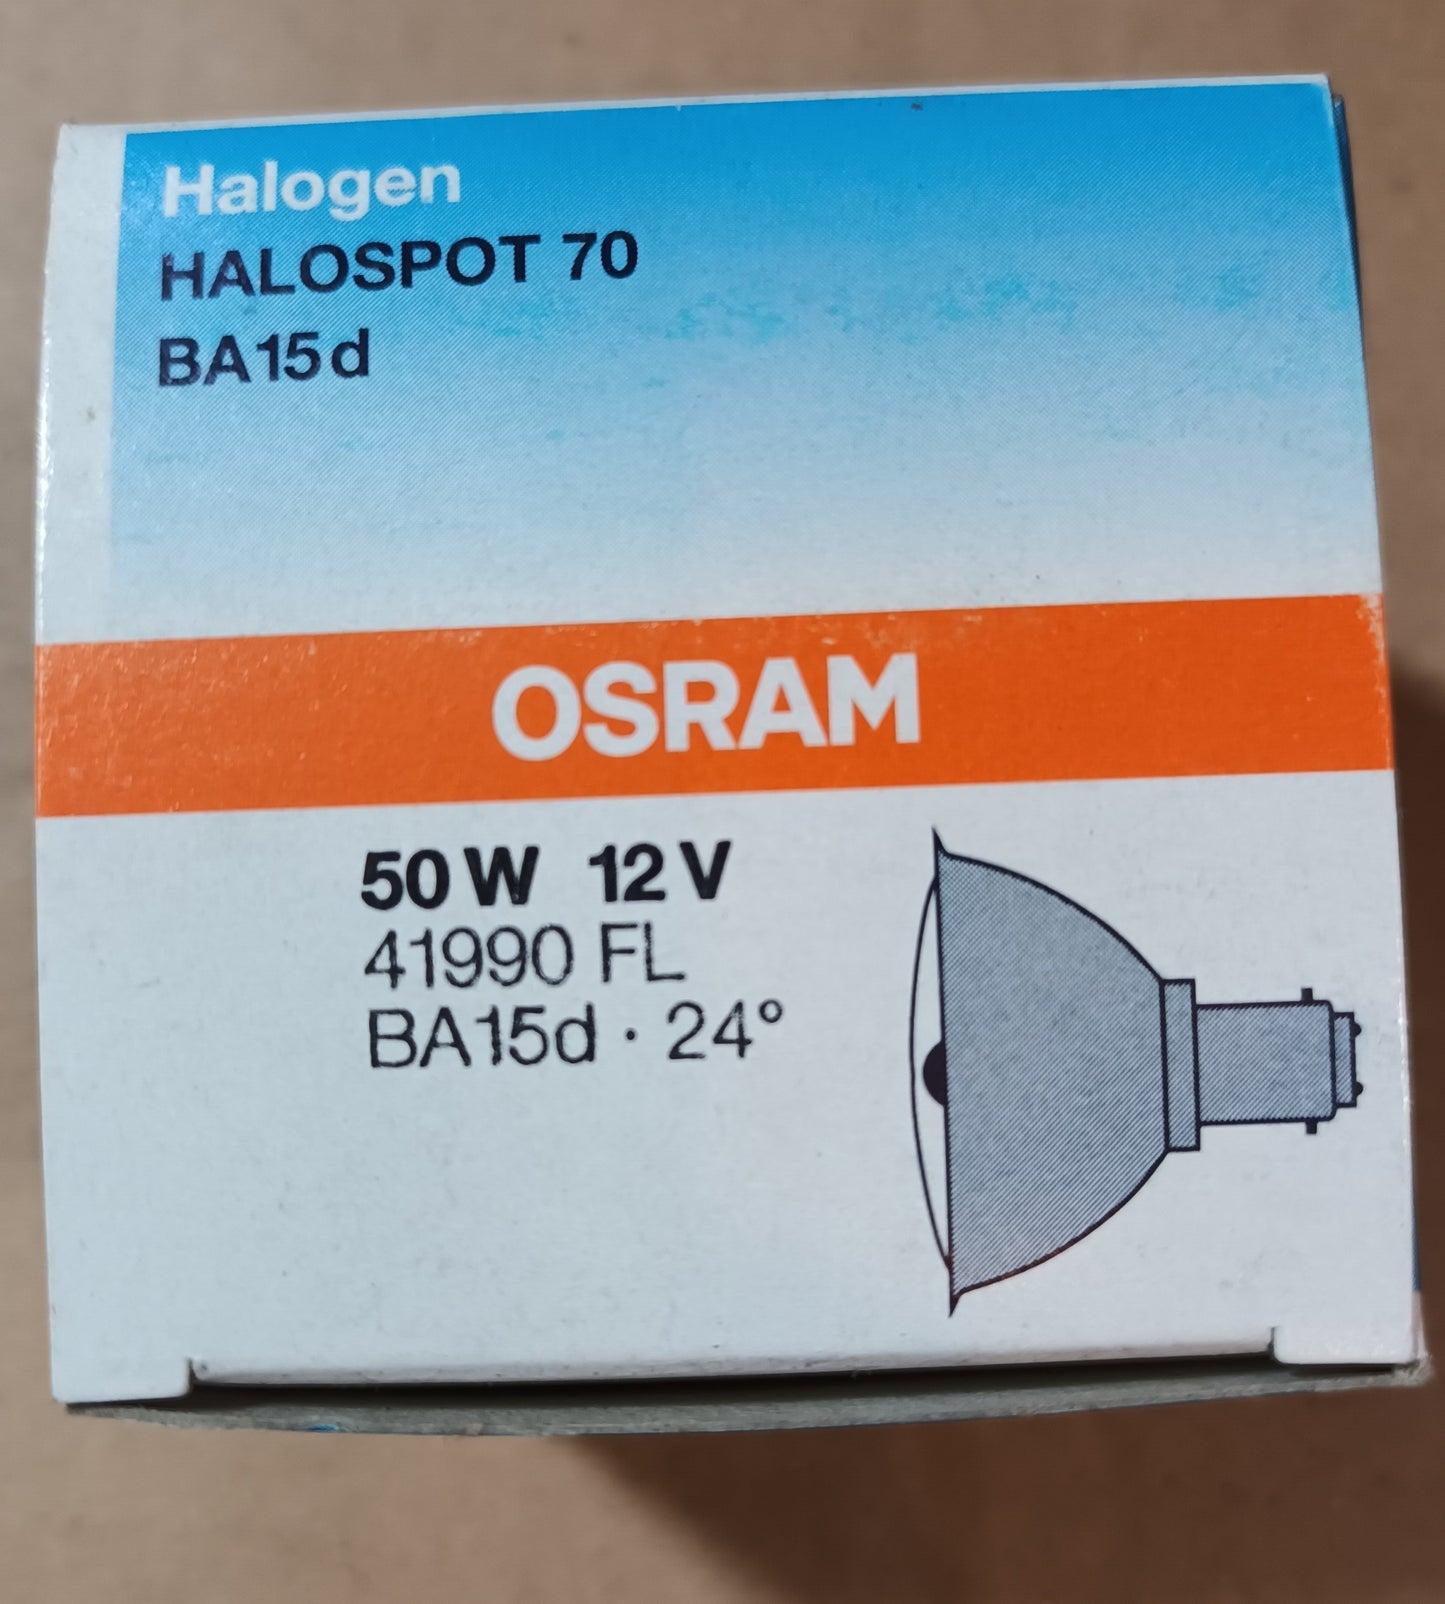 M158 Halospot 70 by Osram 50 watts 12volt code 41990FL BA15d made in Germany